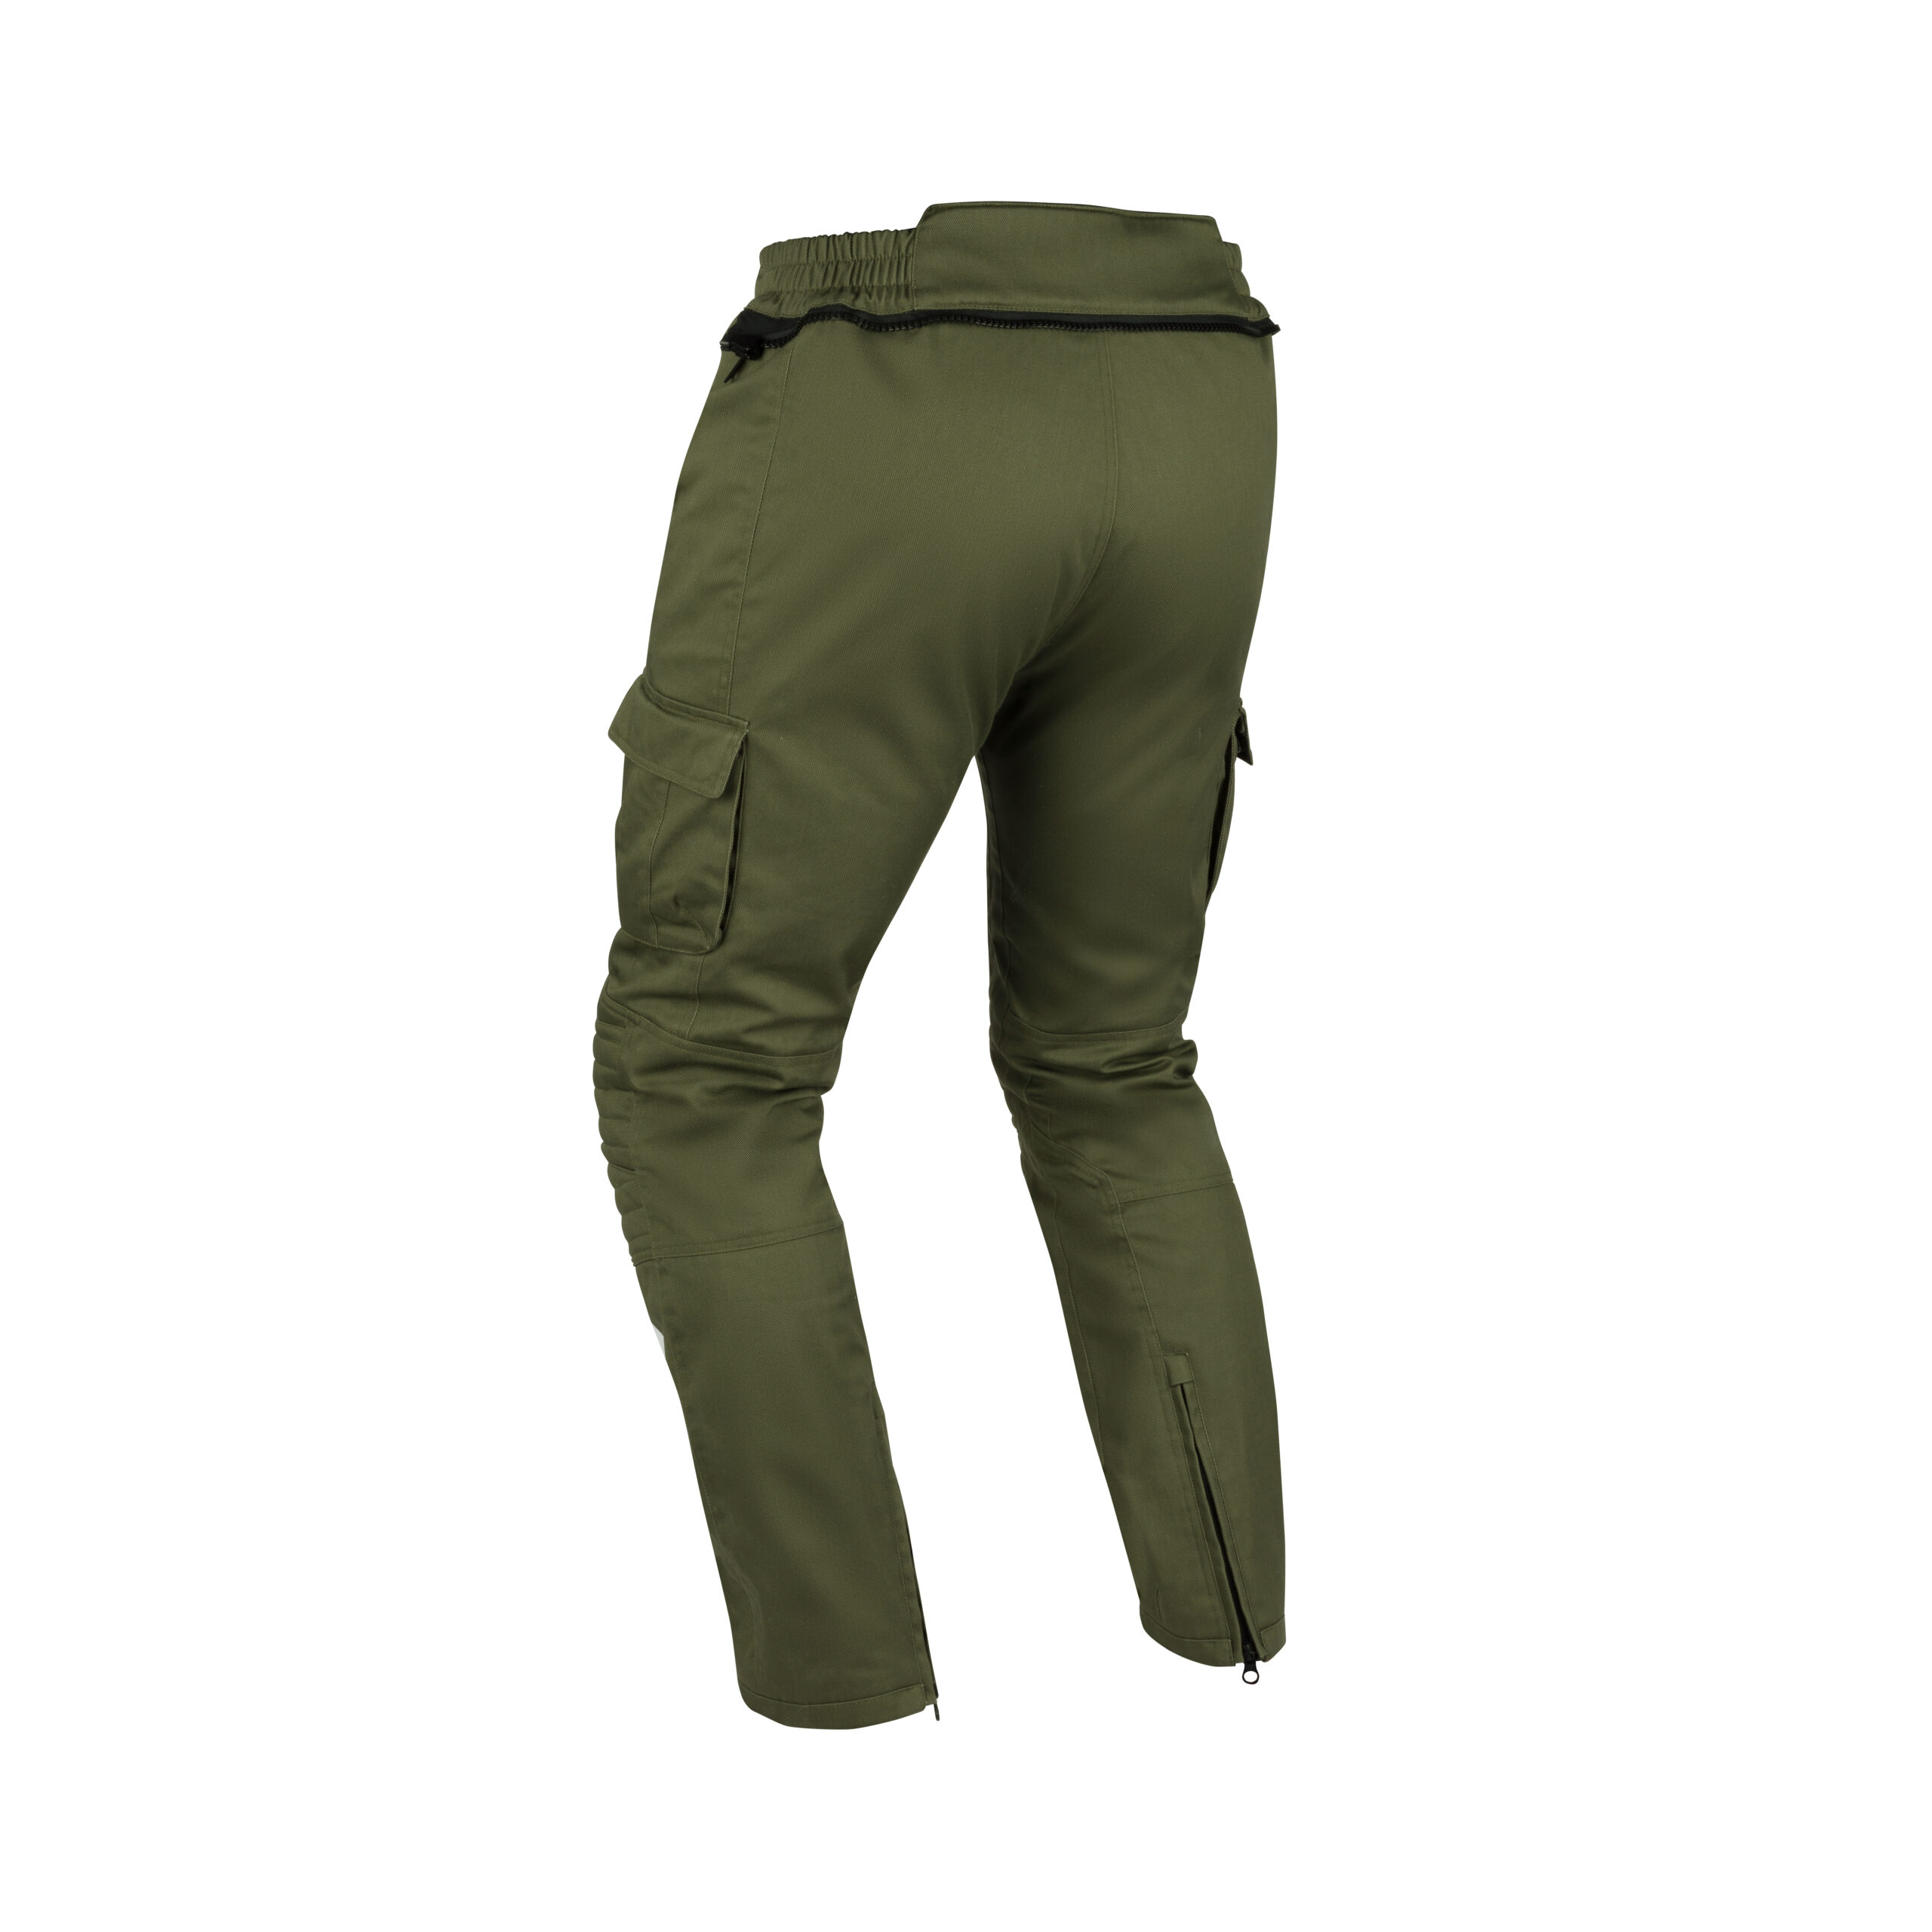 STP299_SEGURA-BORA-PANT Pantalon moto étanche couleur Kaki vue de dos